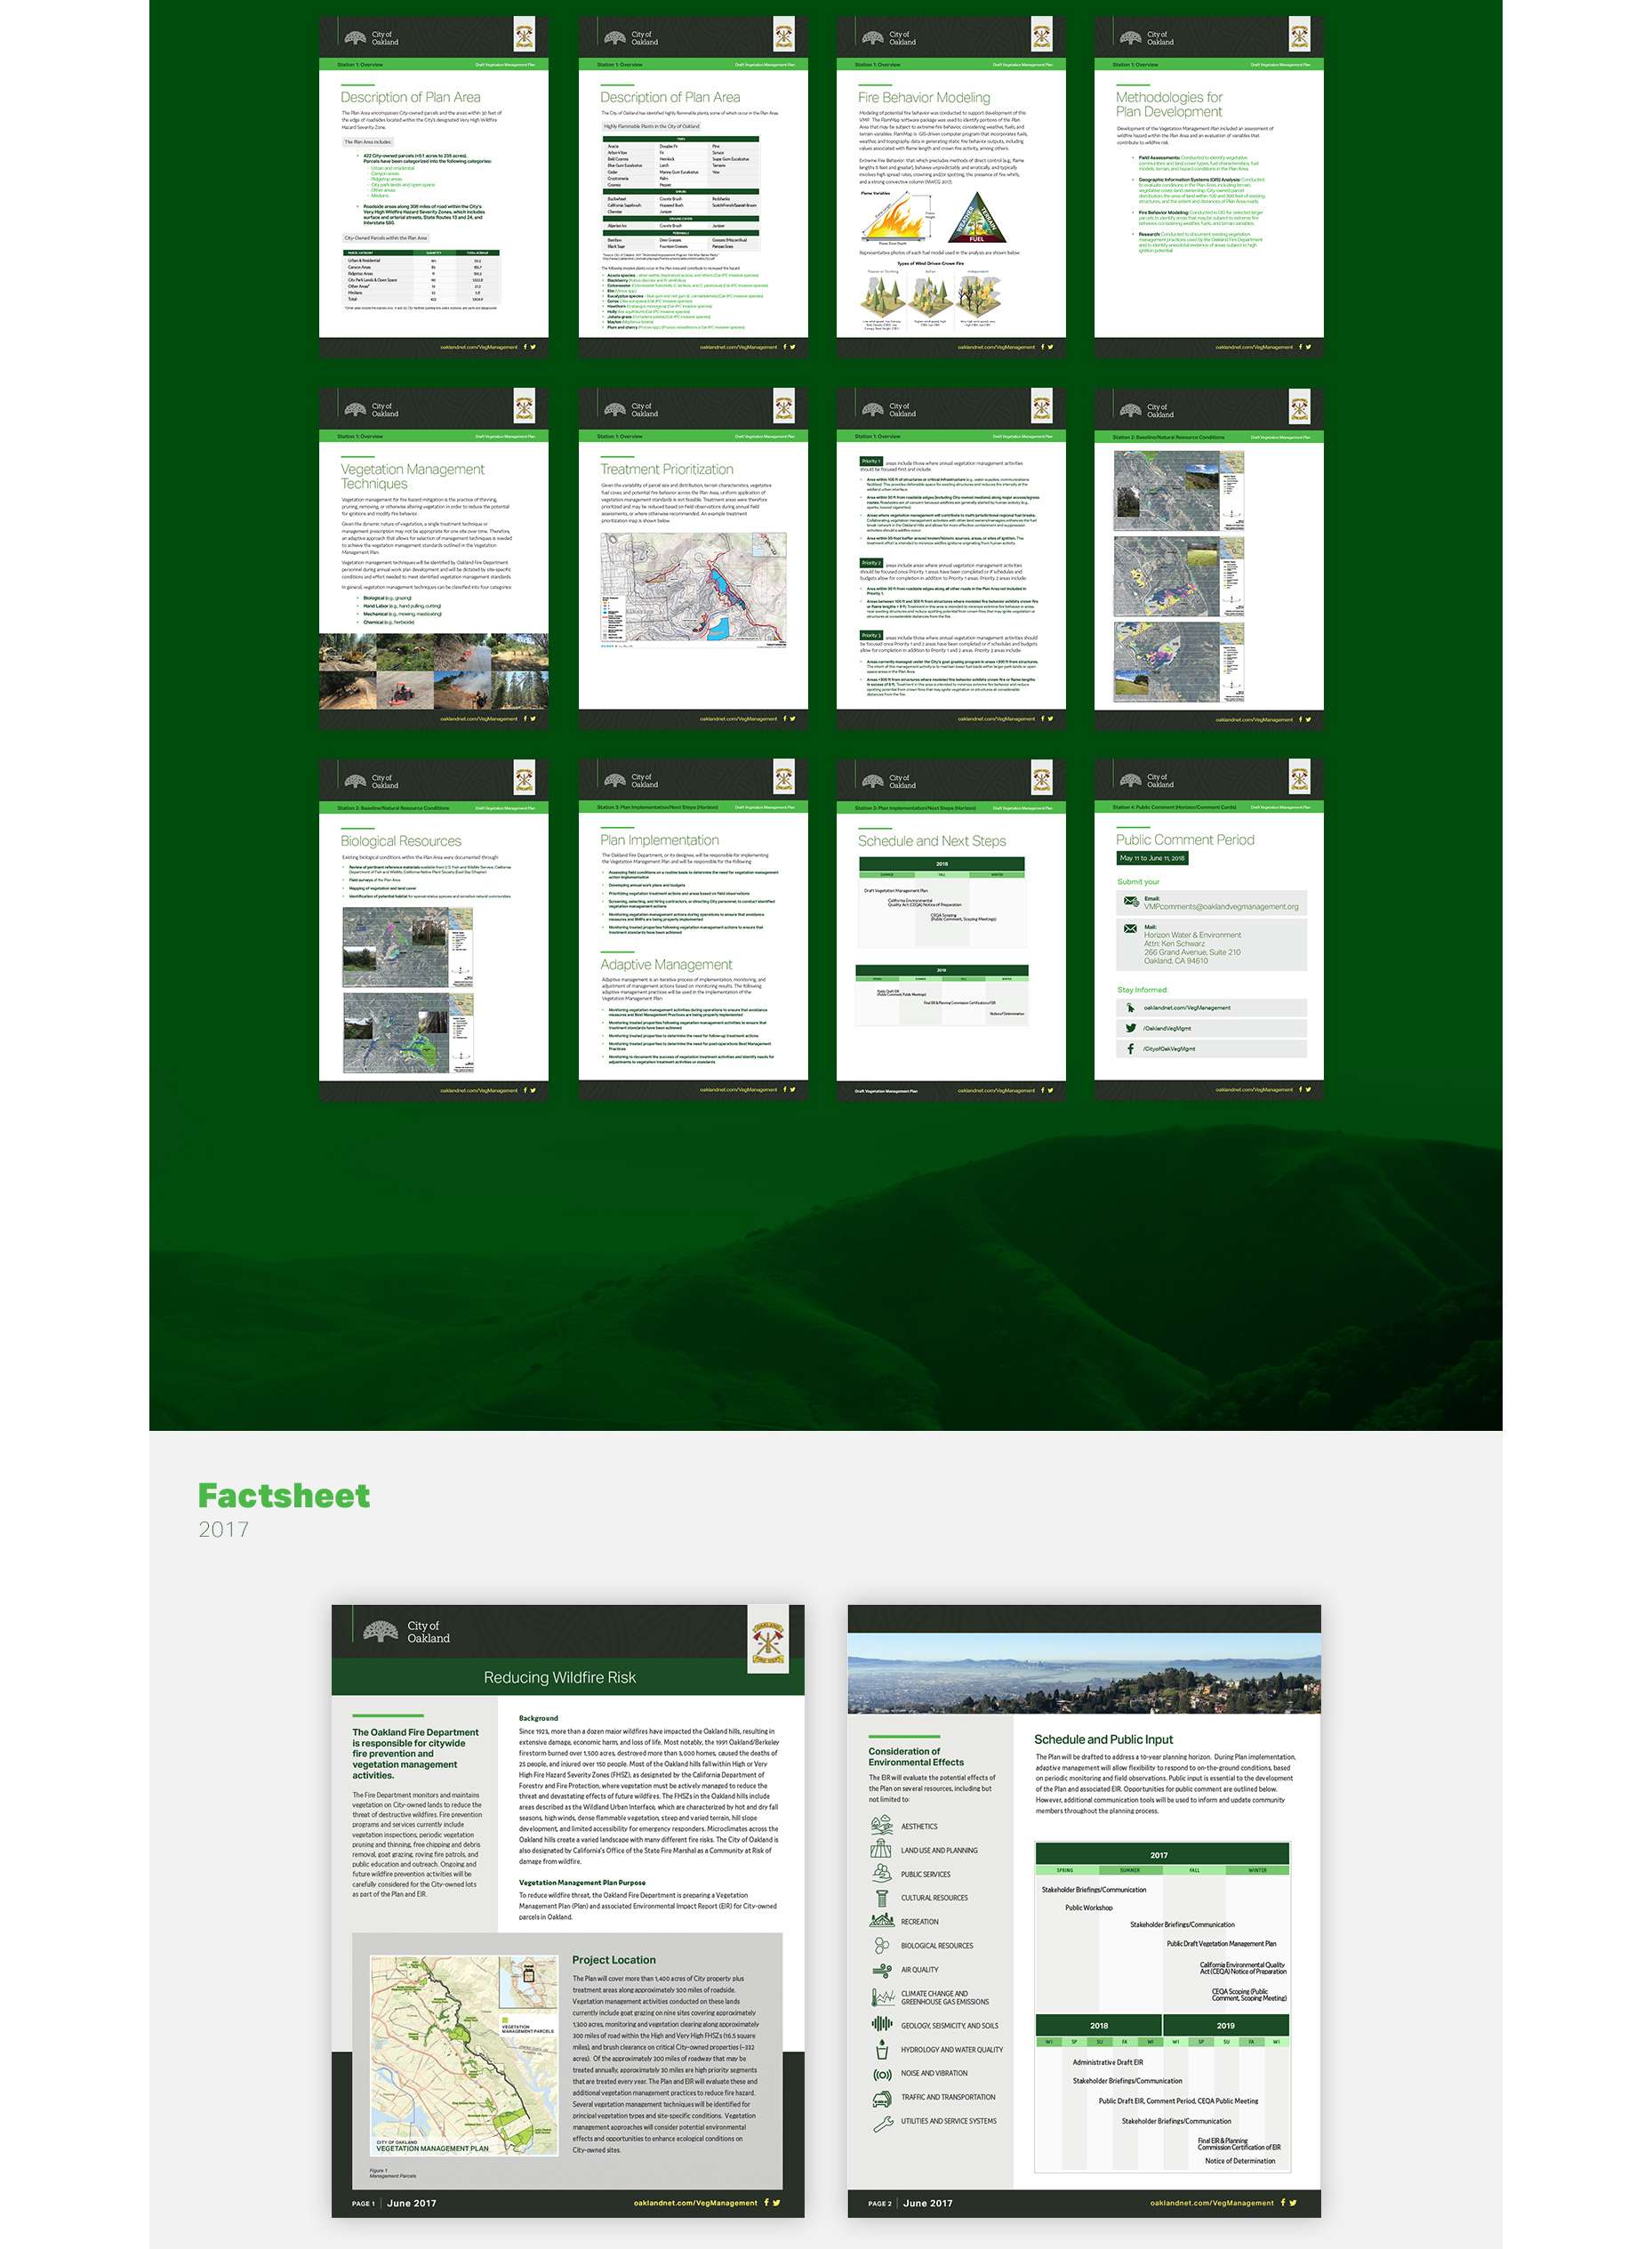 Joint Medias | Print design, information design, meeting presentation materials